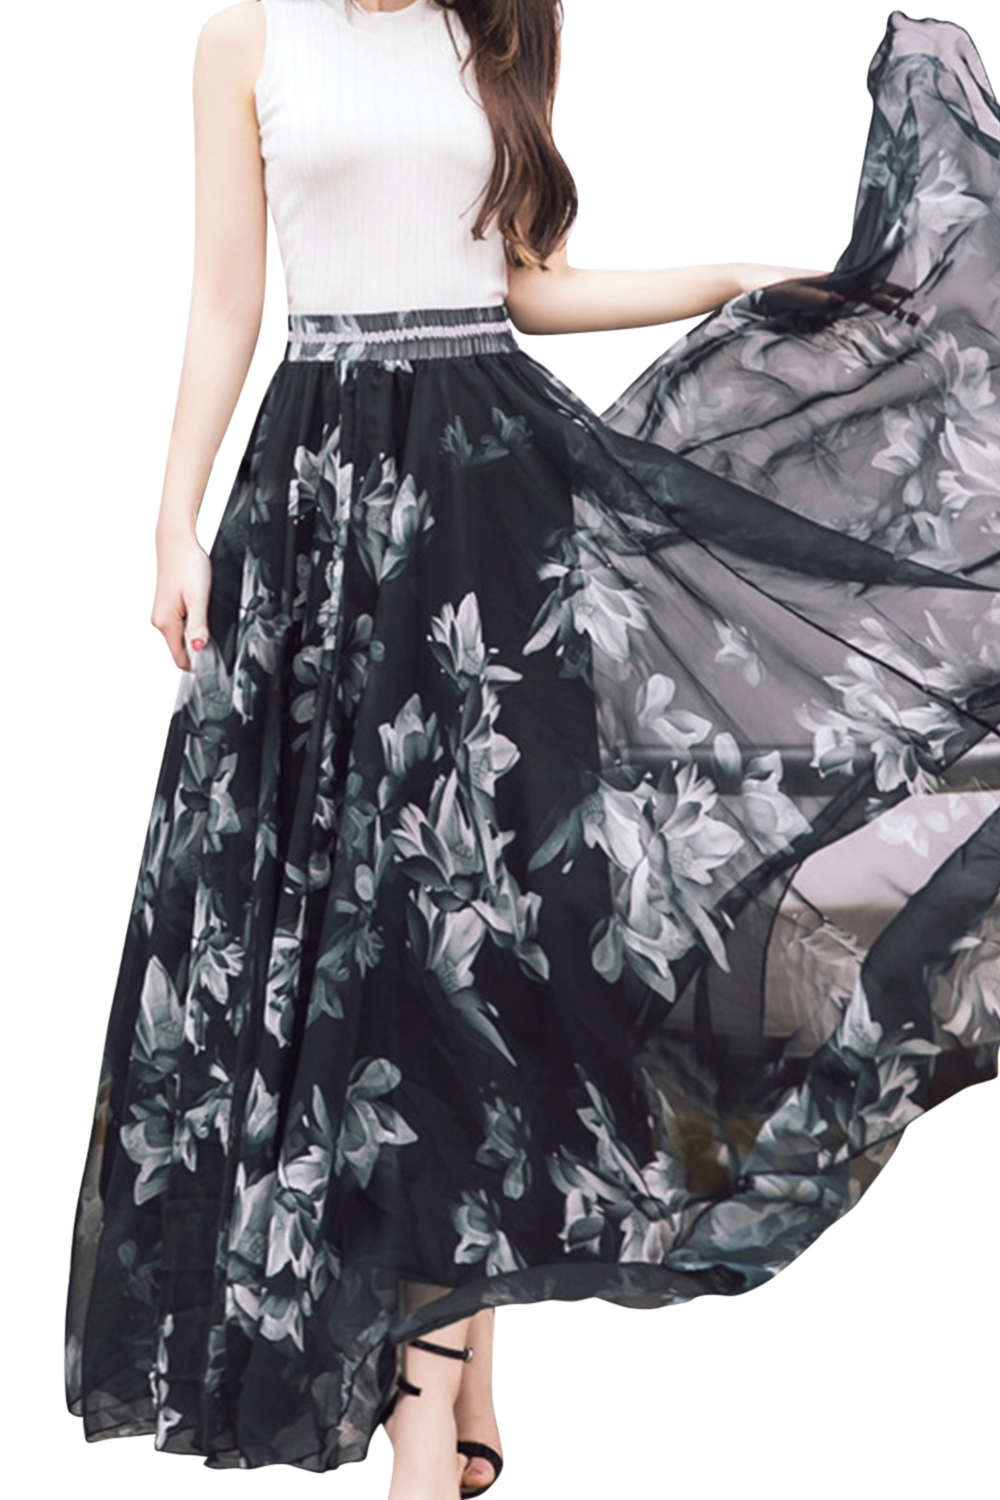 Iyasson Women Boho Printed Chiffon Maxi Skirt